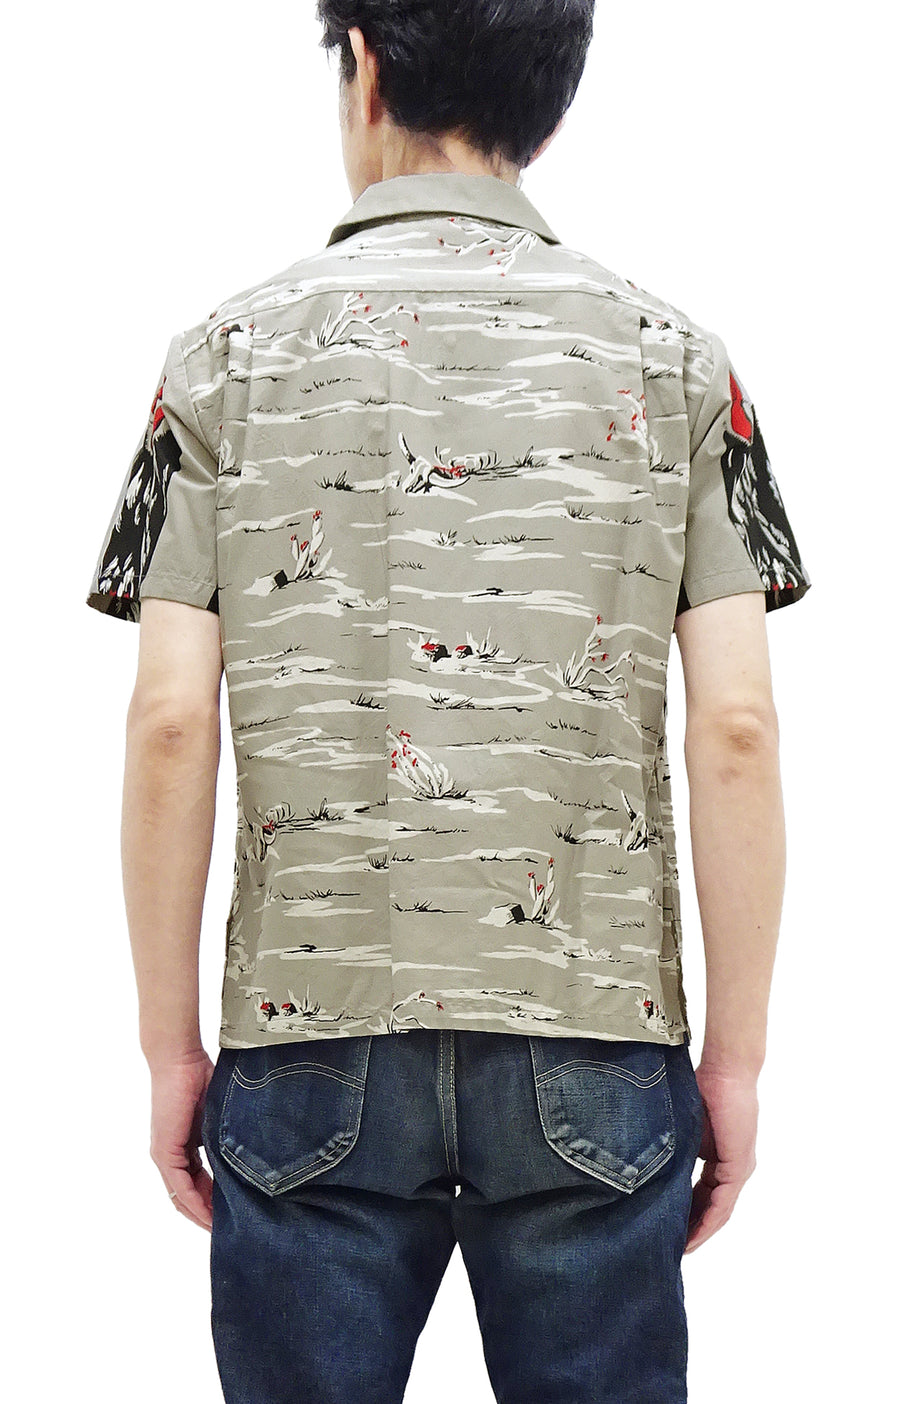 Star of Hollywood Shirt Men's 1950s Condor Graphic Short Sleeve Half Placket Pullover Shirt SH39310 115 Gray